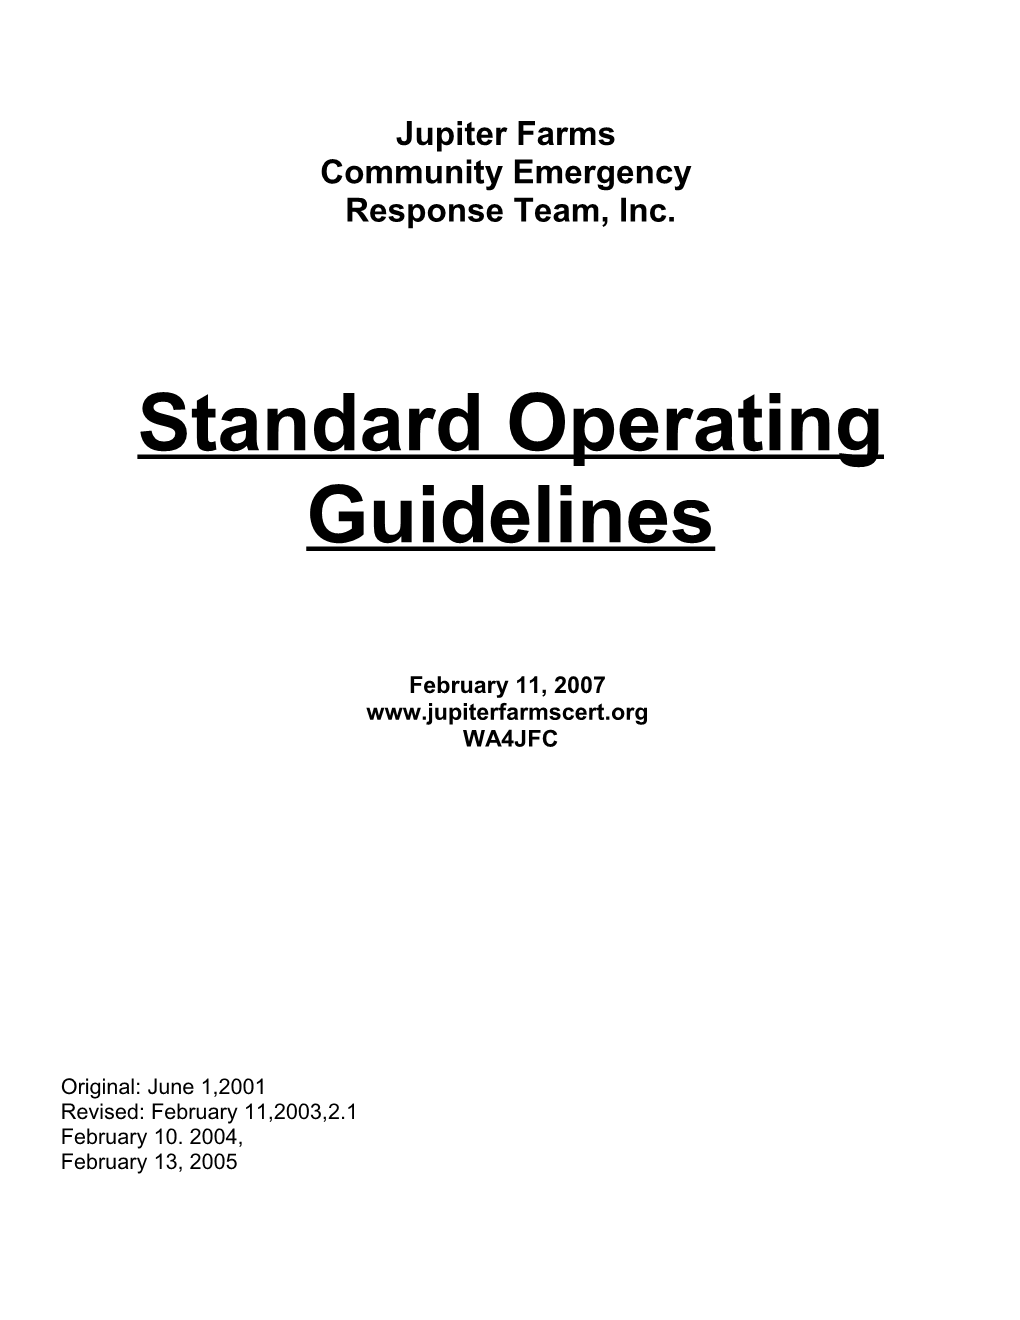 Jupiter Farms CERT Standard Operating Guidelines